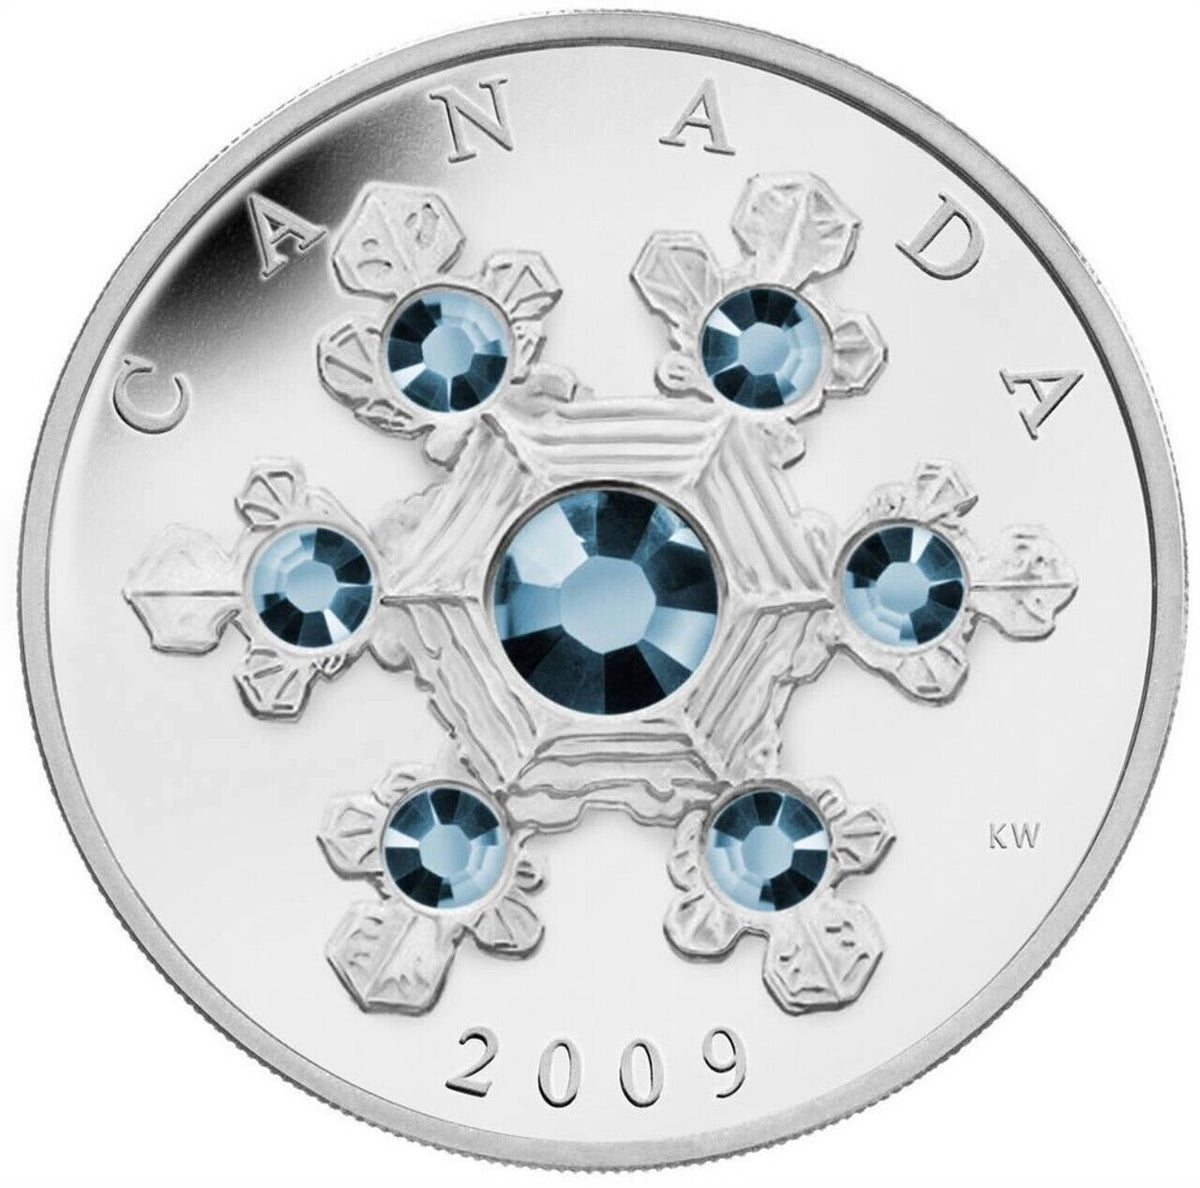 1 Oz Silver Coin 2009 $20 Canada Blue Crystal Snowflake Swarovski-classypw.com-1